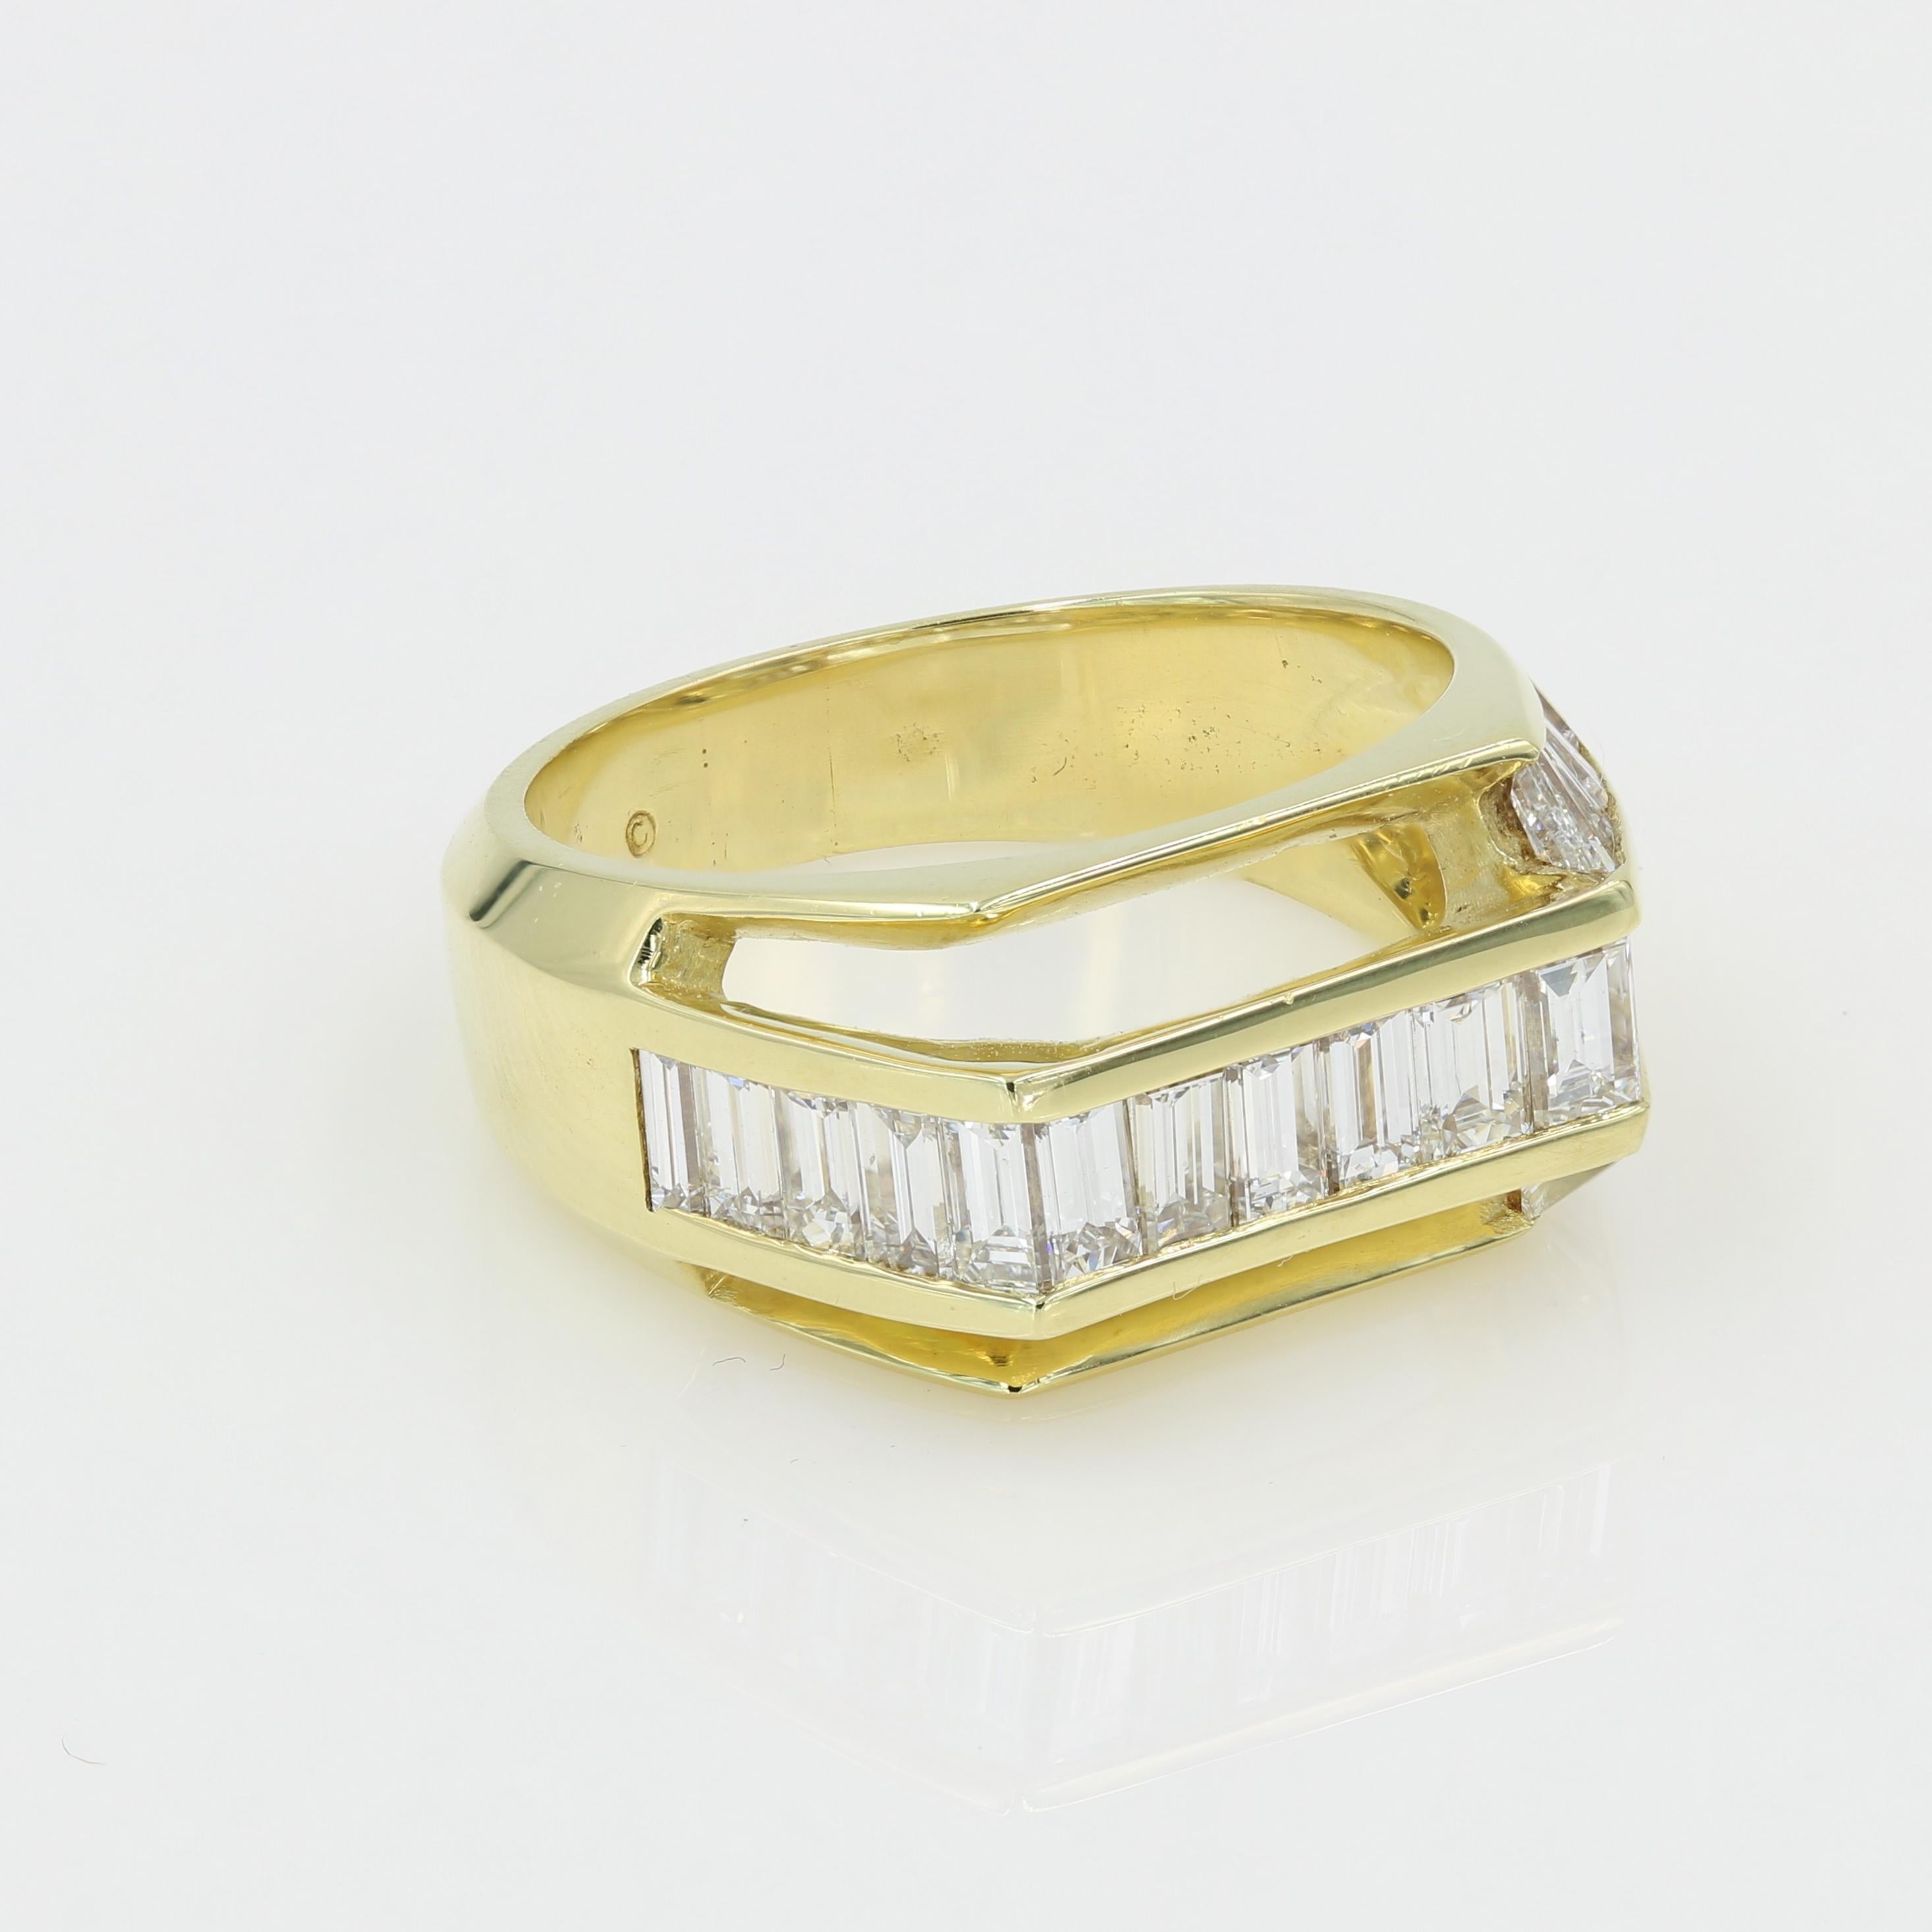 Baguette Cut Lester Lampert Original Design Gent's Baguette Diamond Ring in 18 Karat Gold